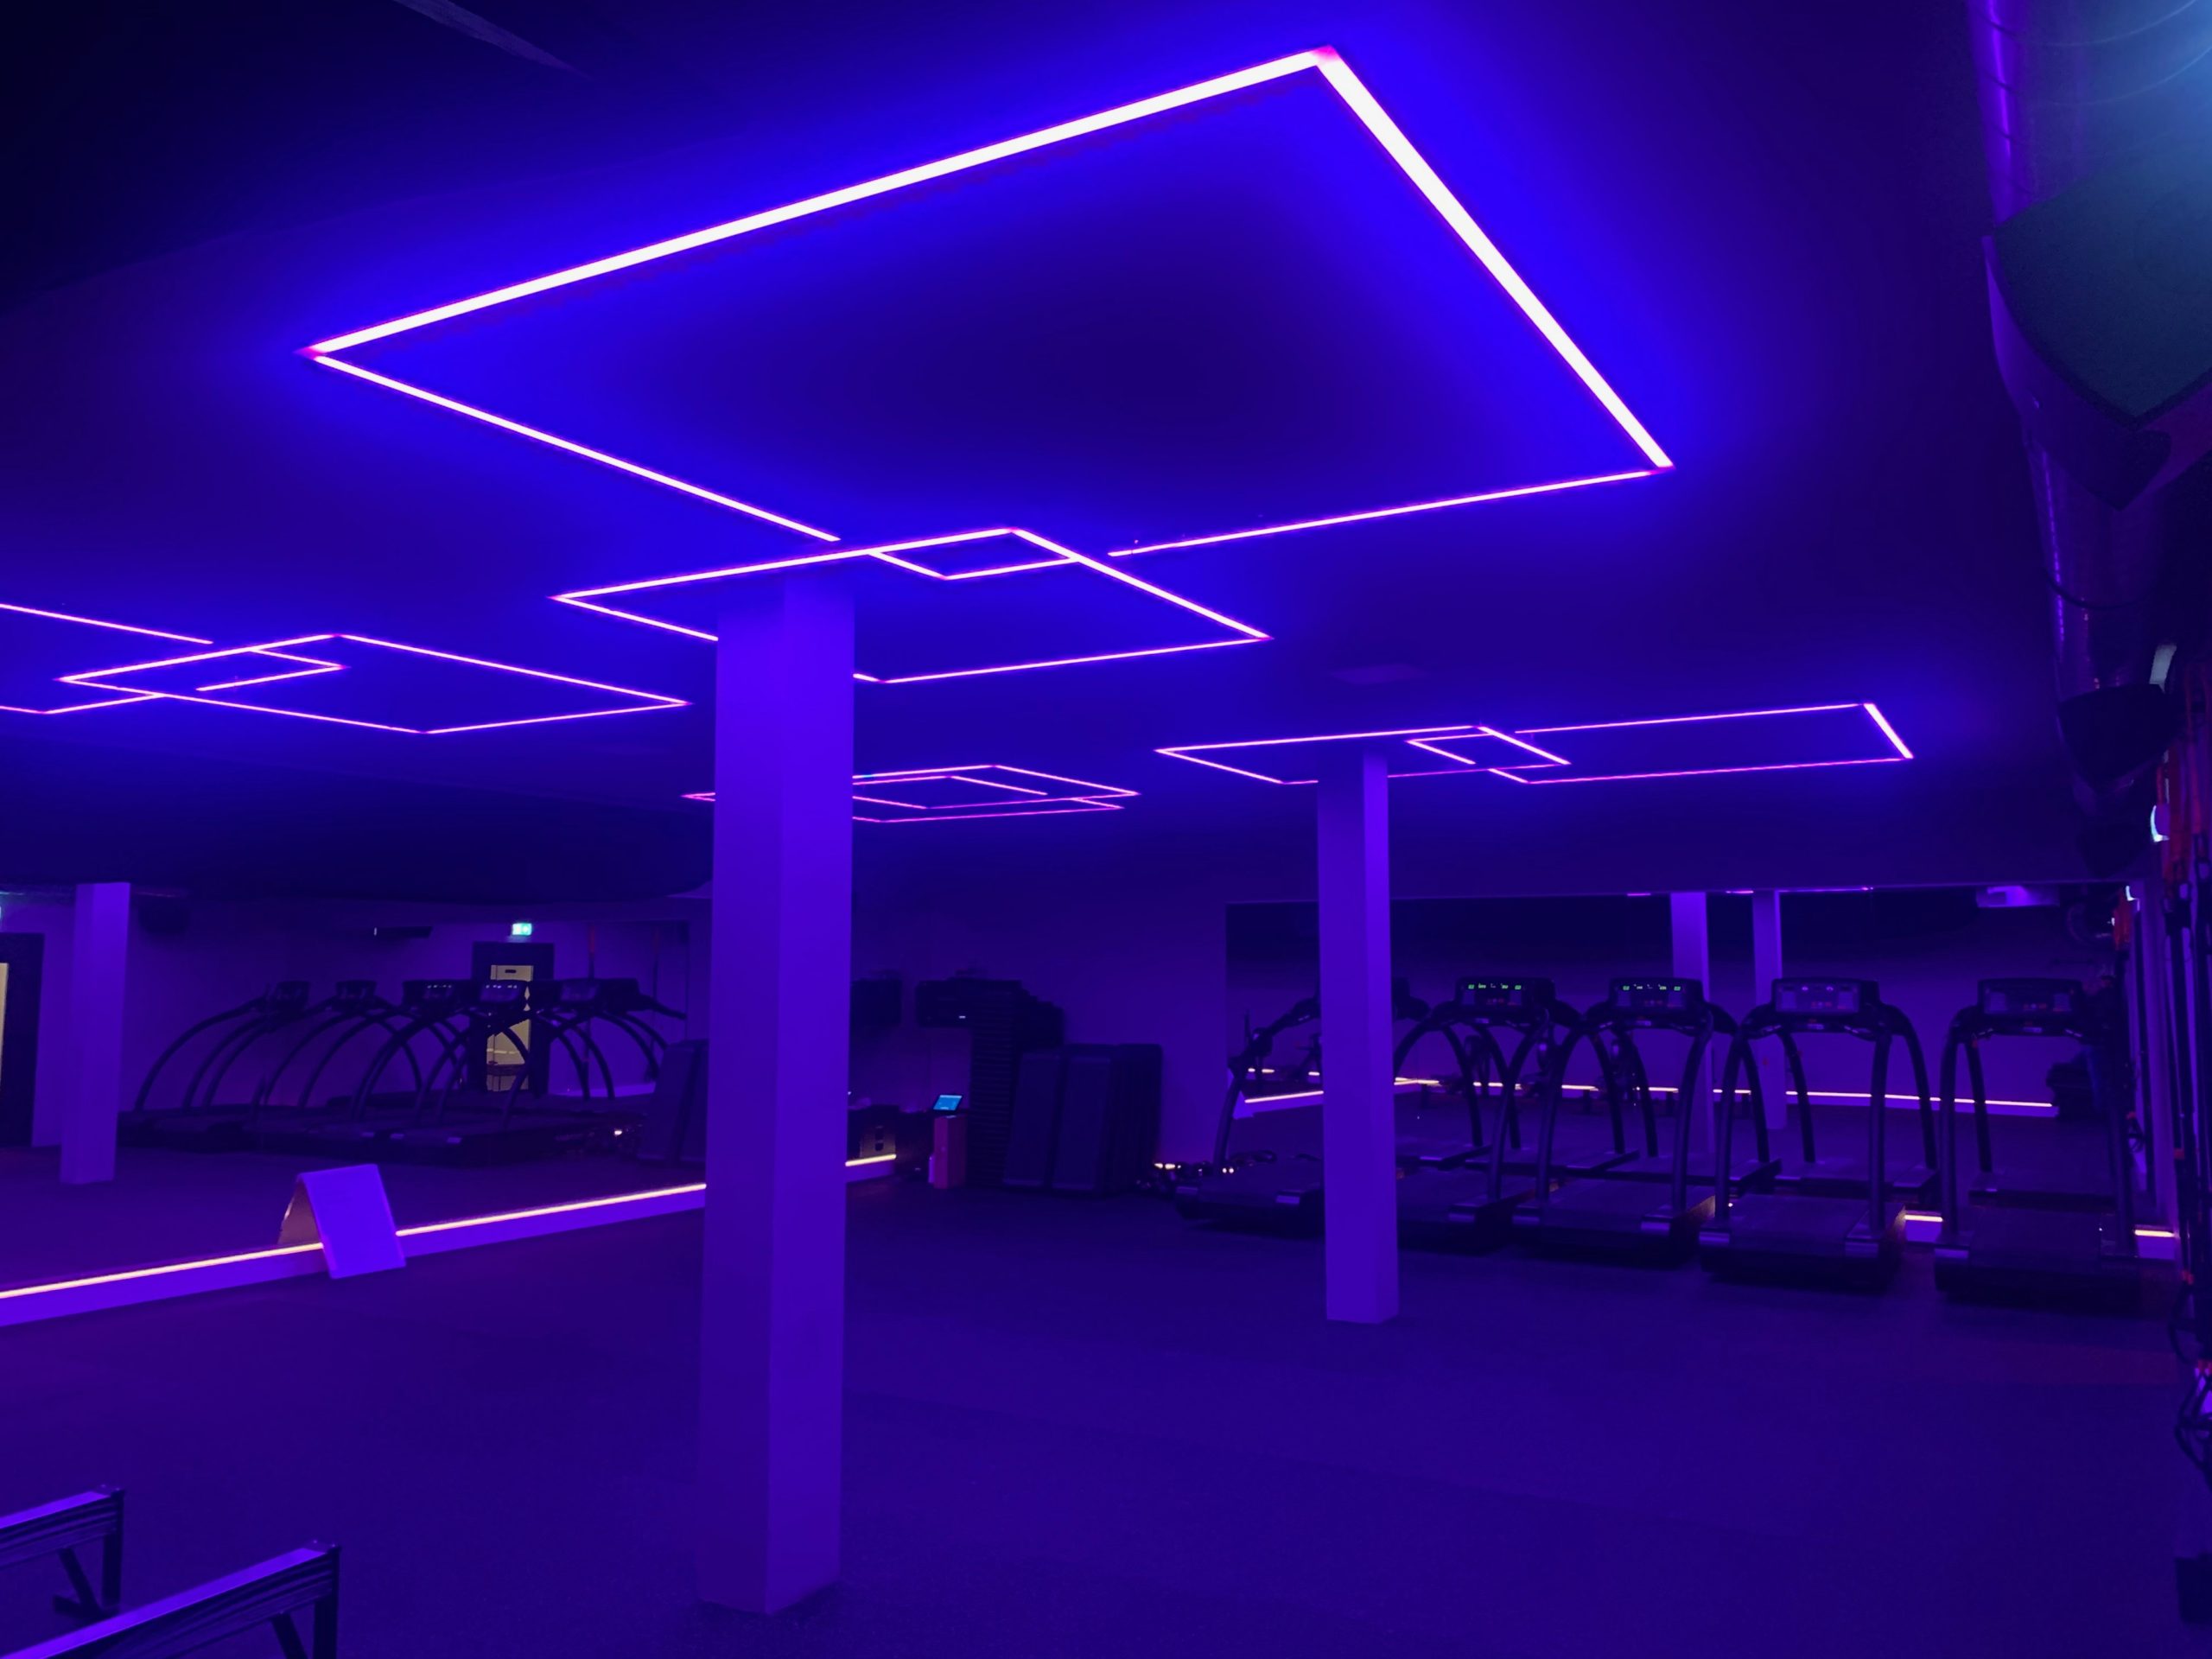 Digi LED Sportschool The Workout Studio Amsterdam | Starled.nl